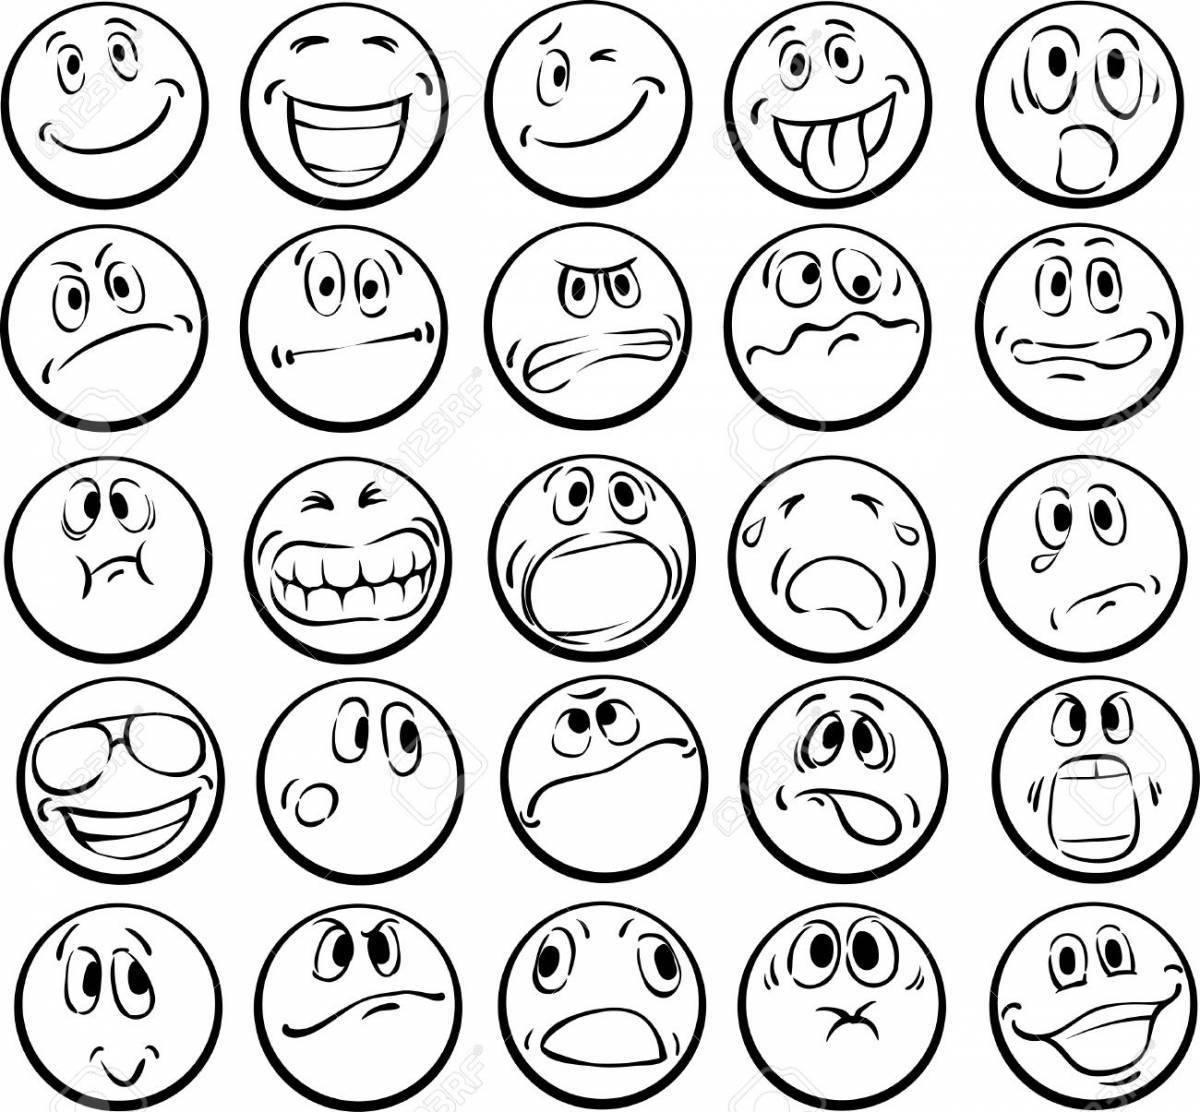 Joyful printable emoji coloring page